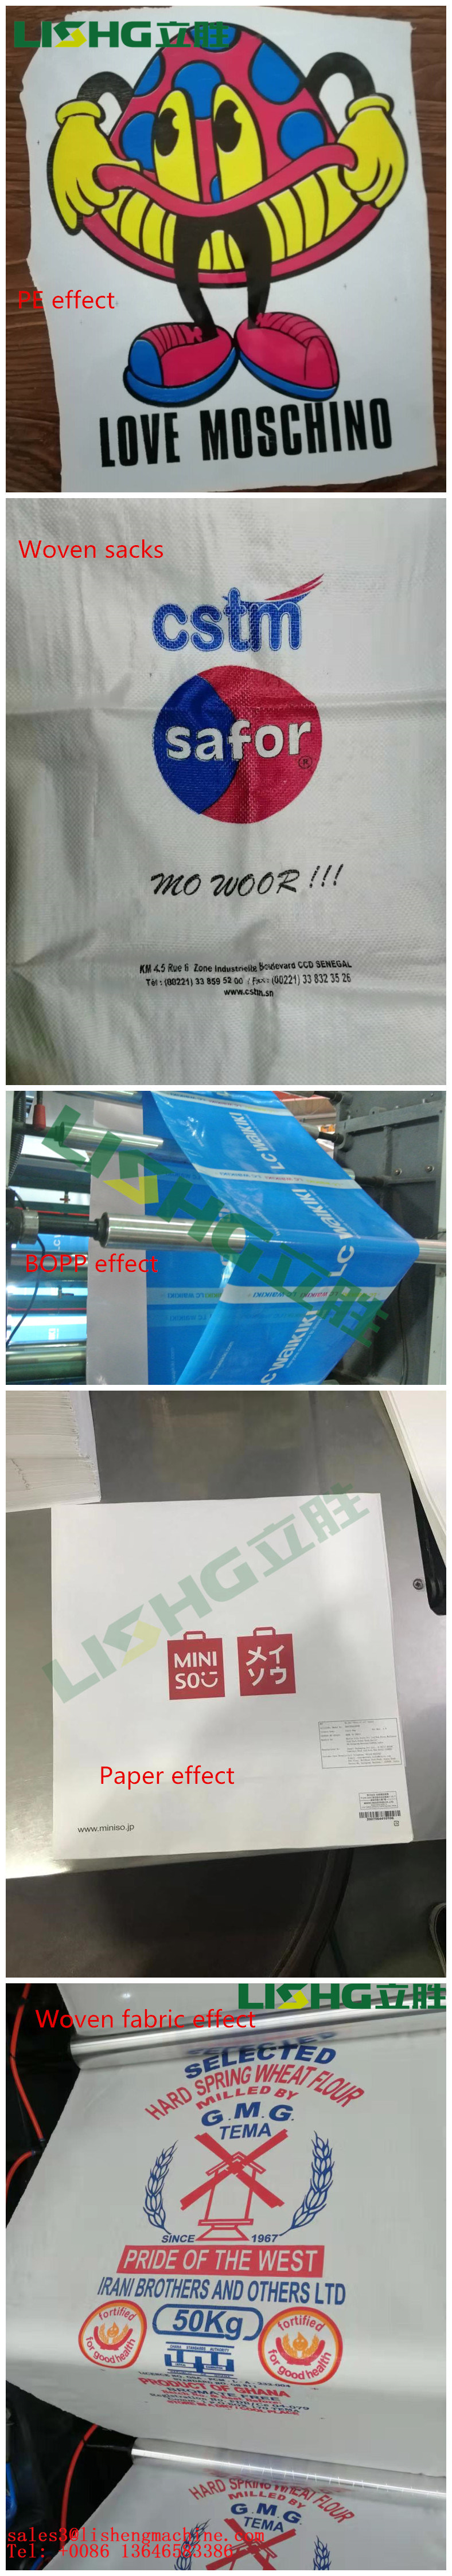 2 Color Flexographic Printing Machine for PP Woven Sacks